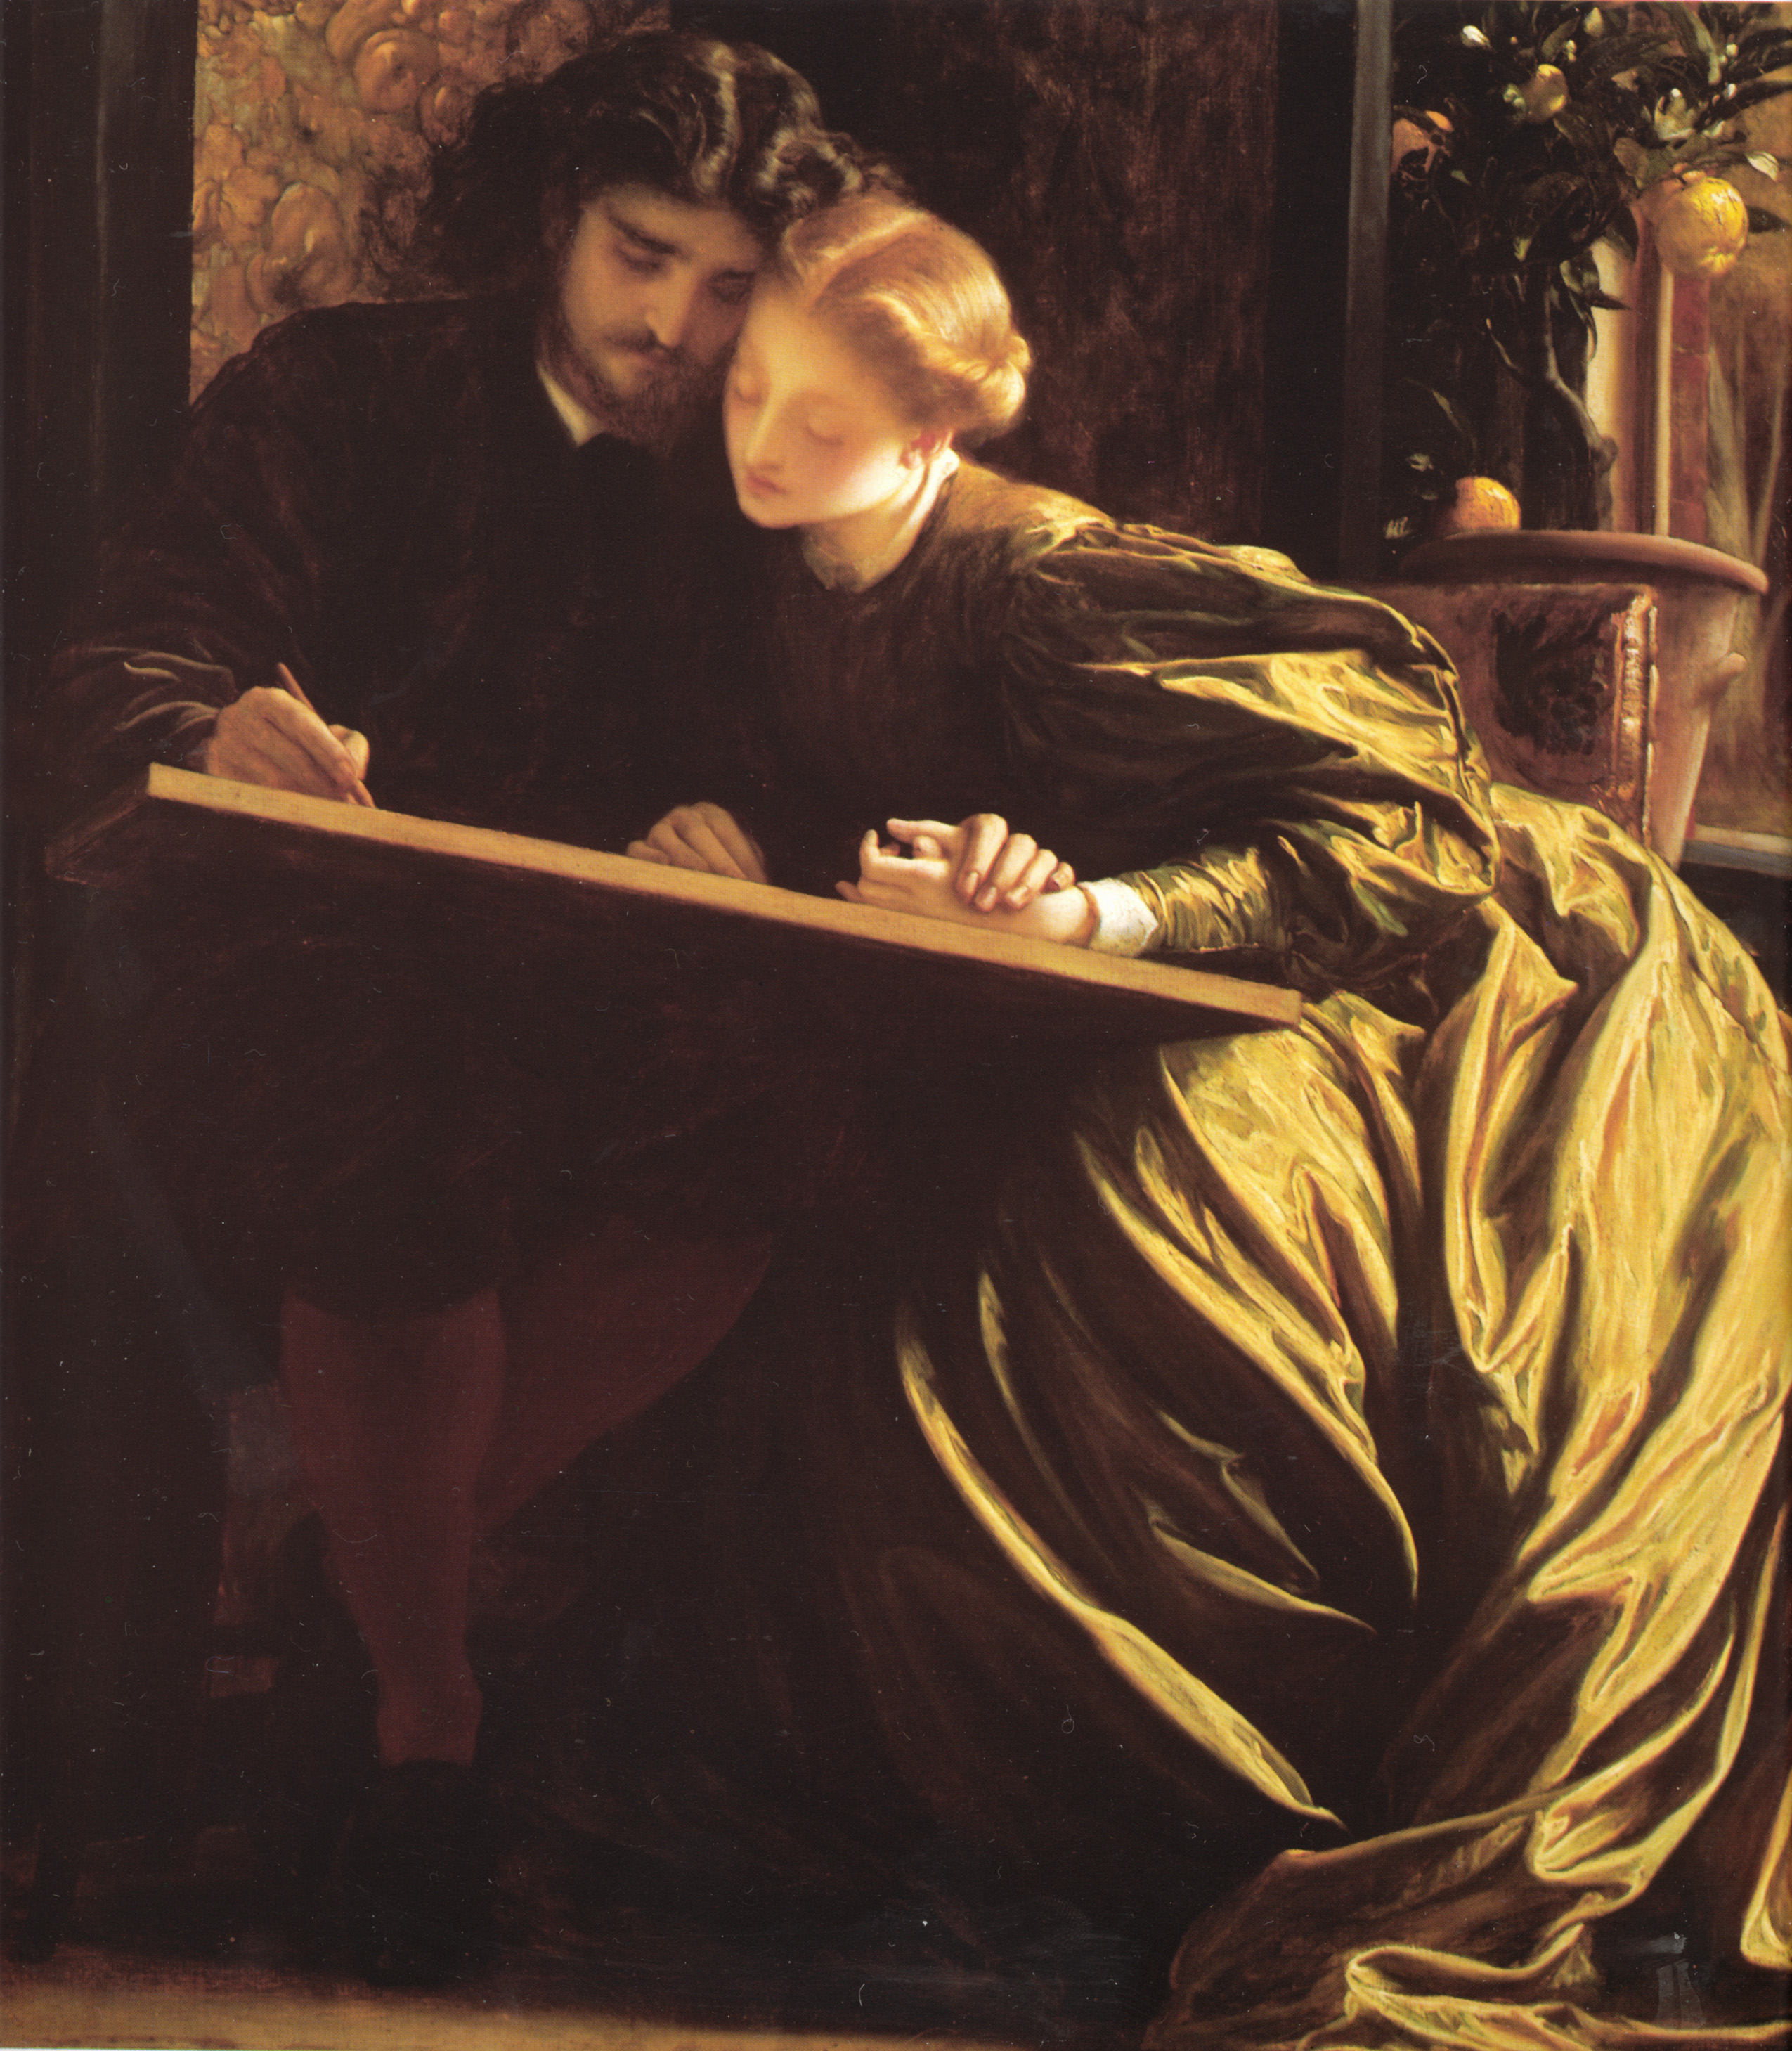 The Painter's Honeymoon by Frederic Leighton, circa 1864